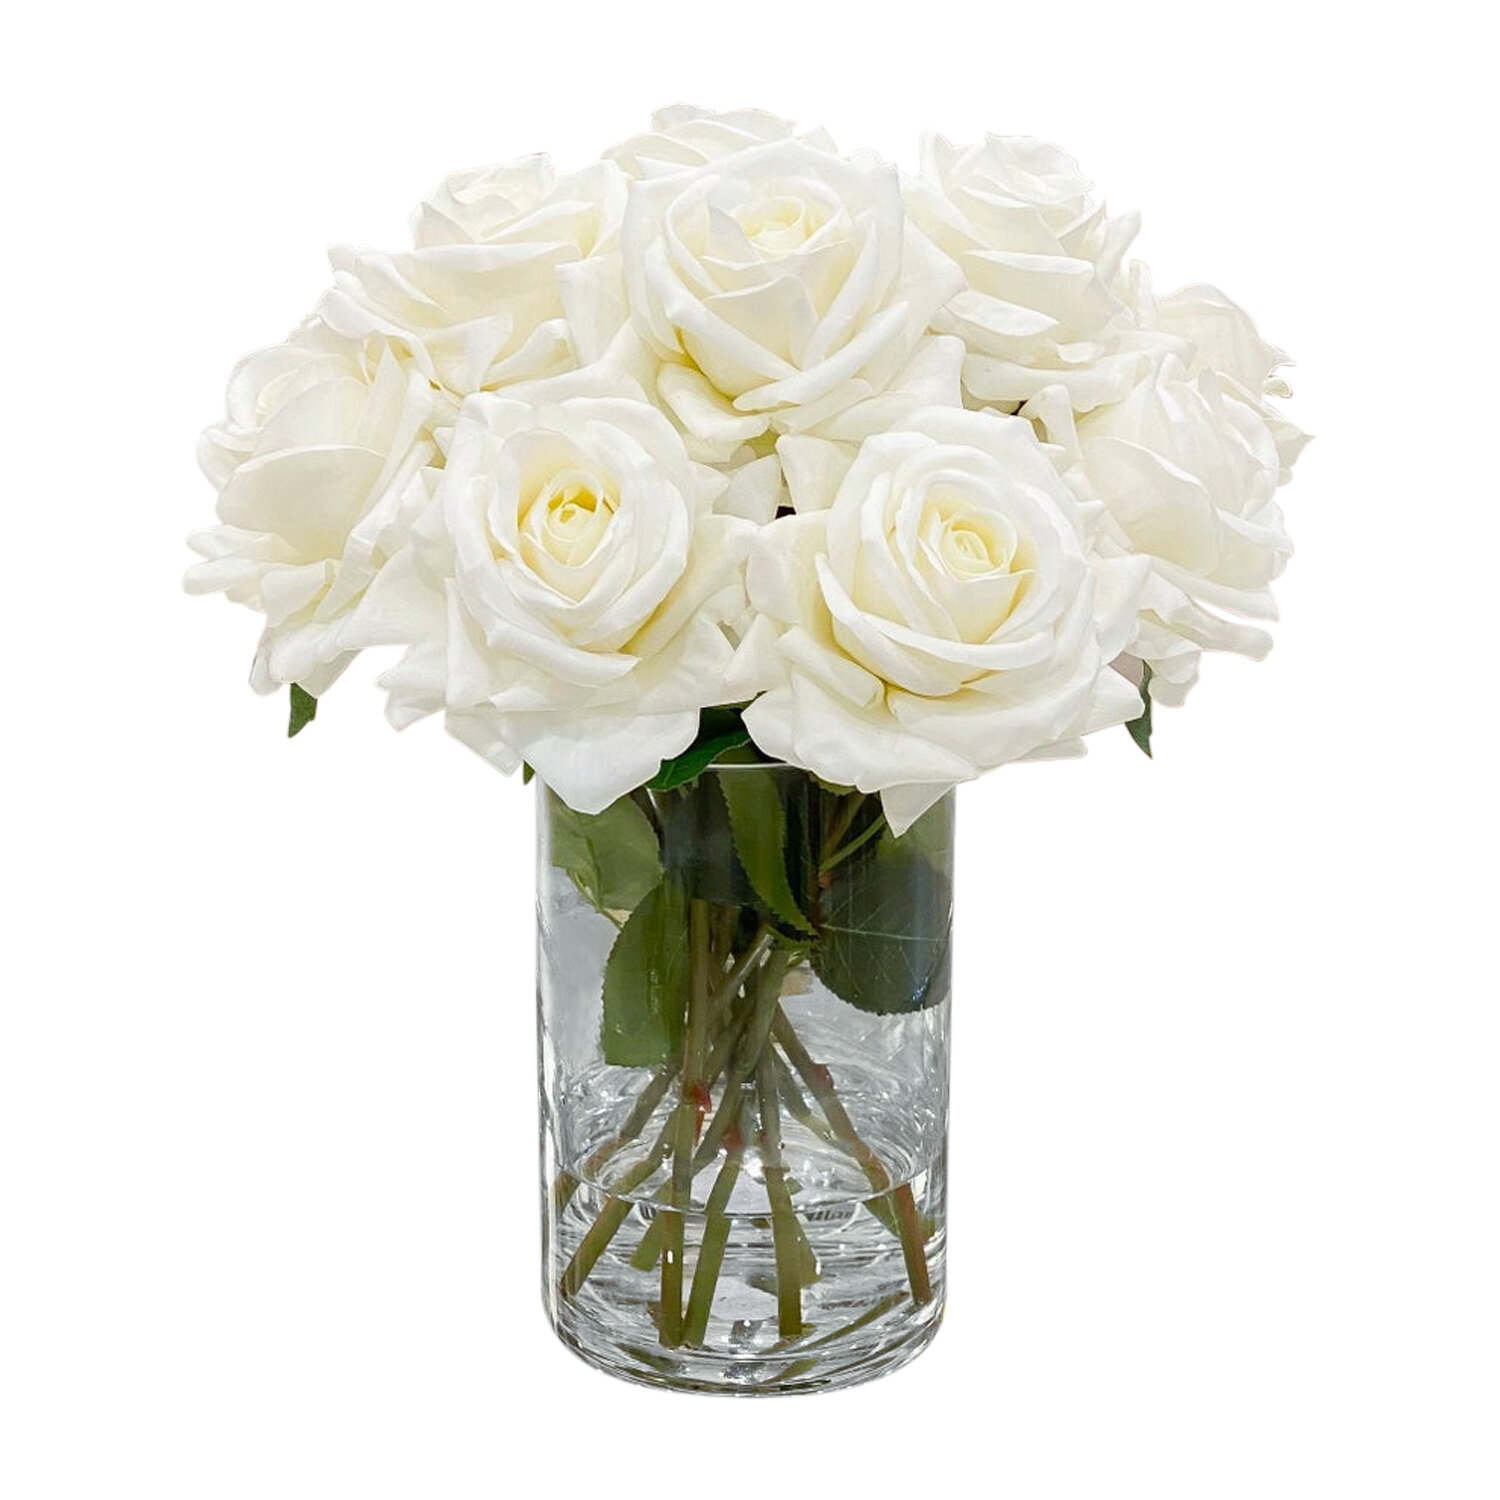 Flovery Roses Arrangement in Vase & Reviews